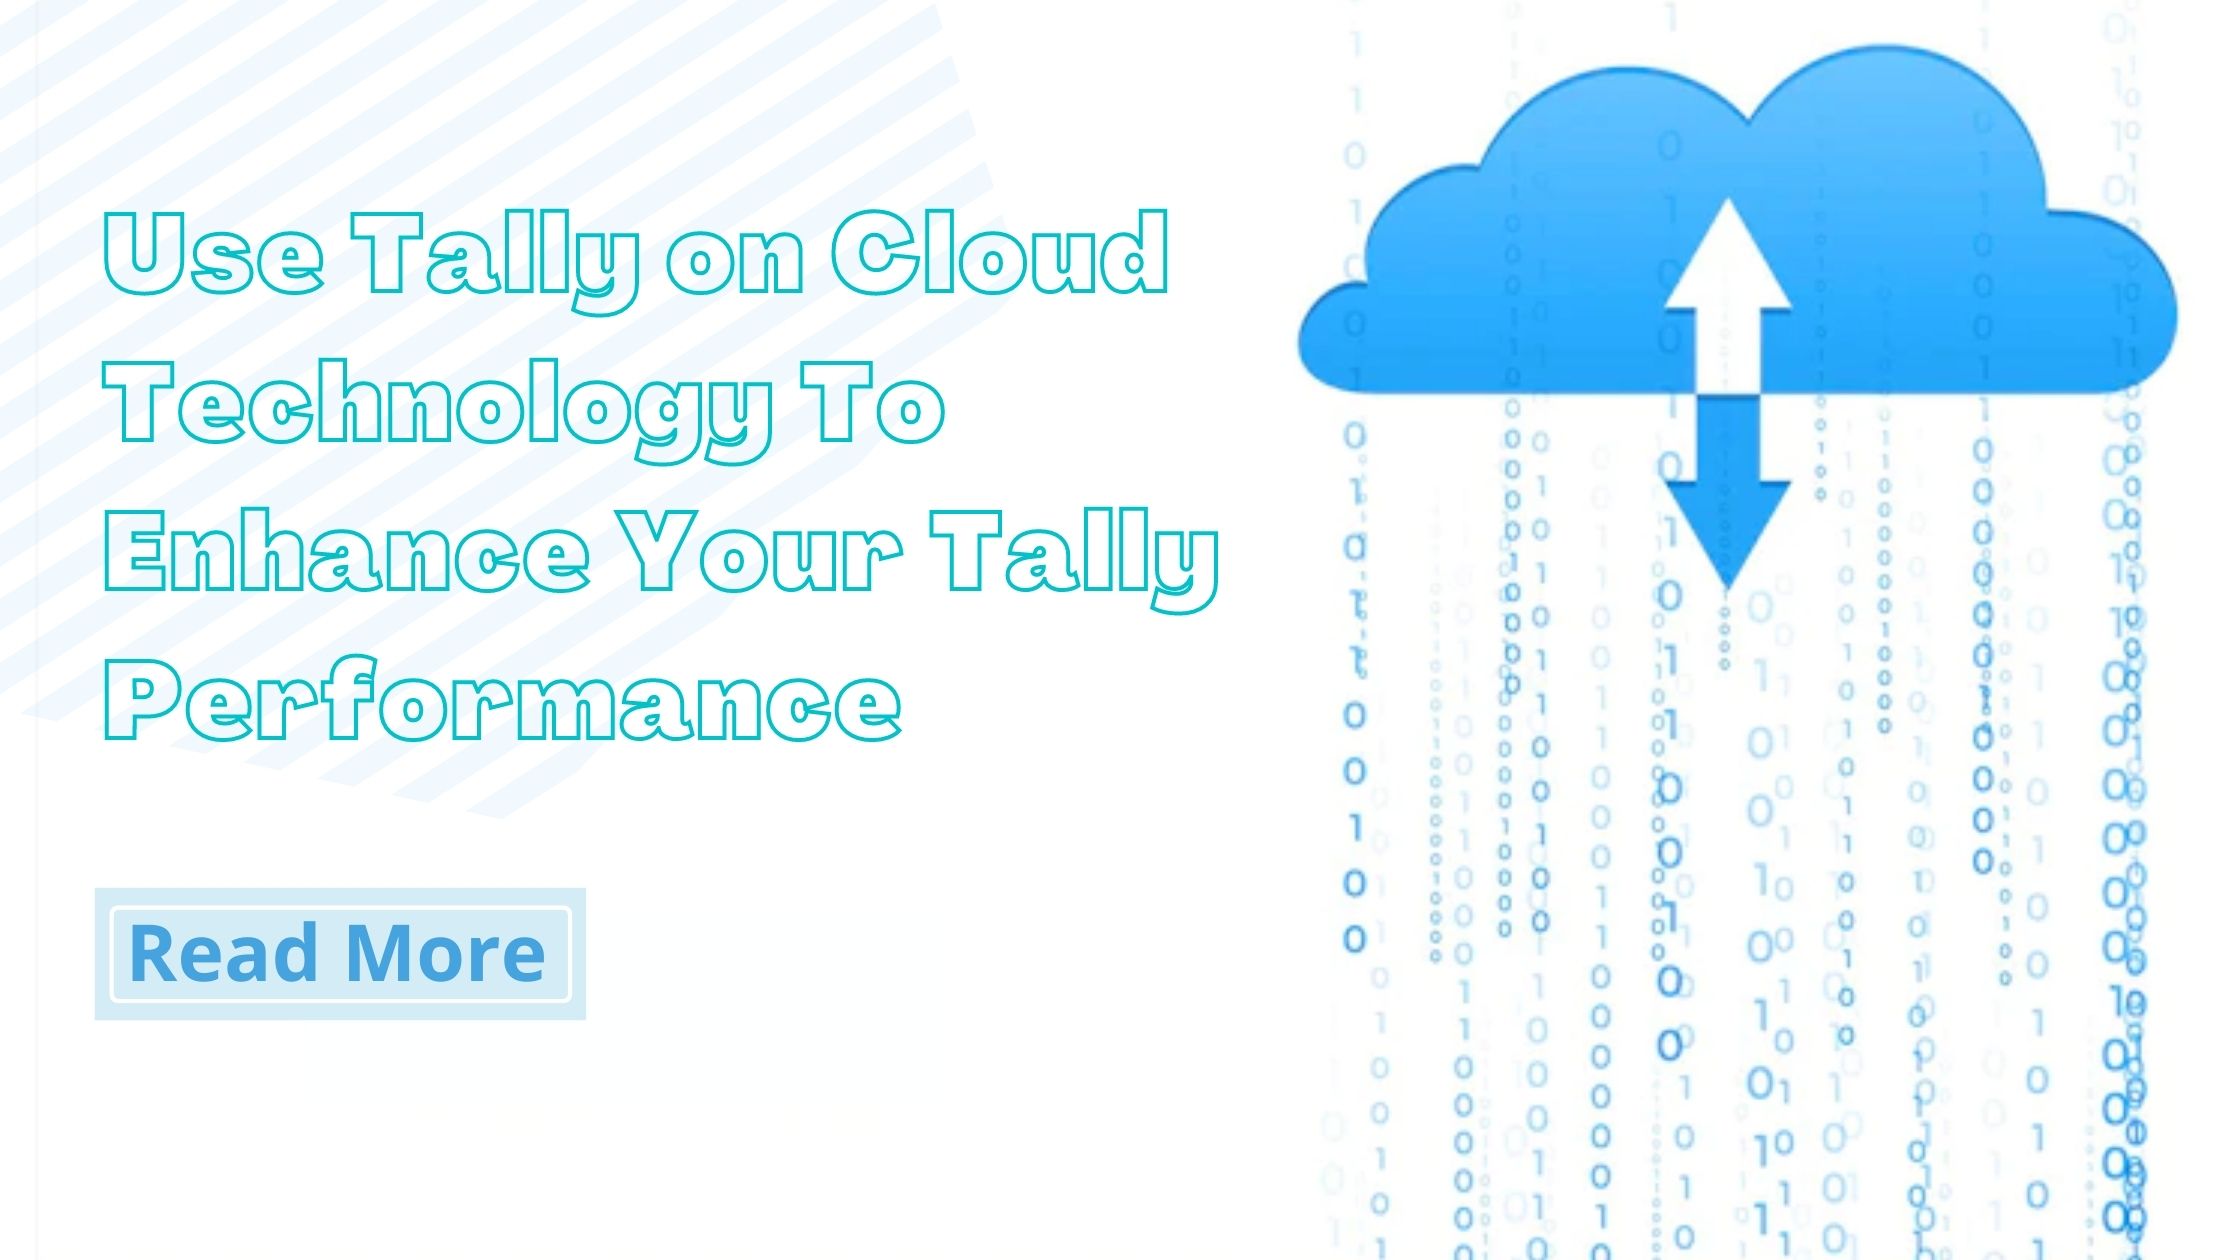 Tally on Cloud technology